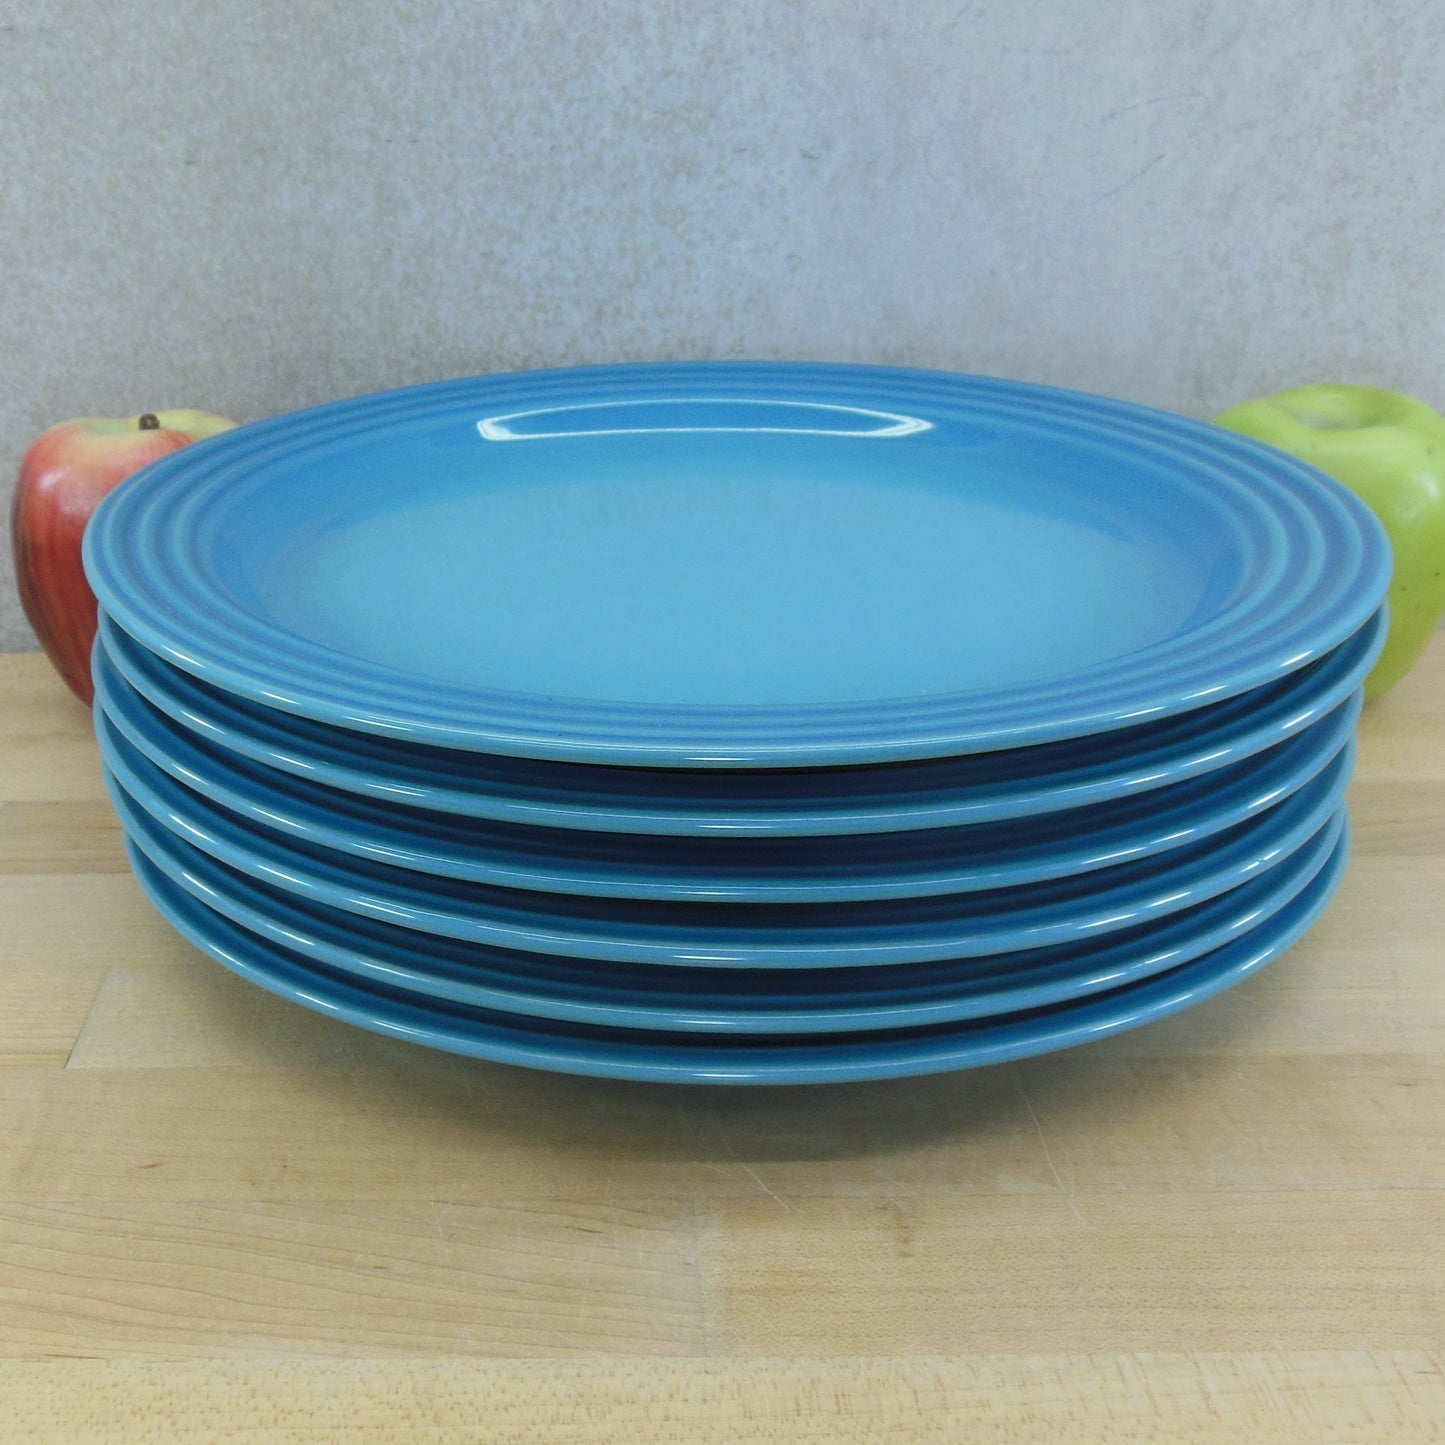 Le Creuset Stoneware Caribbean Blue Teal - 6 Dinner Plates 10.5"